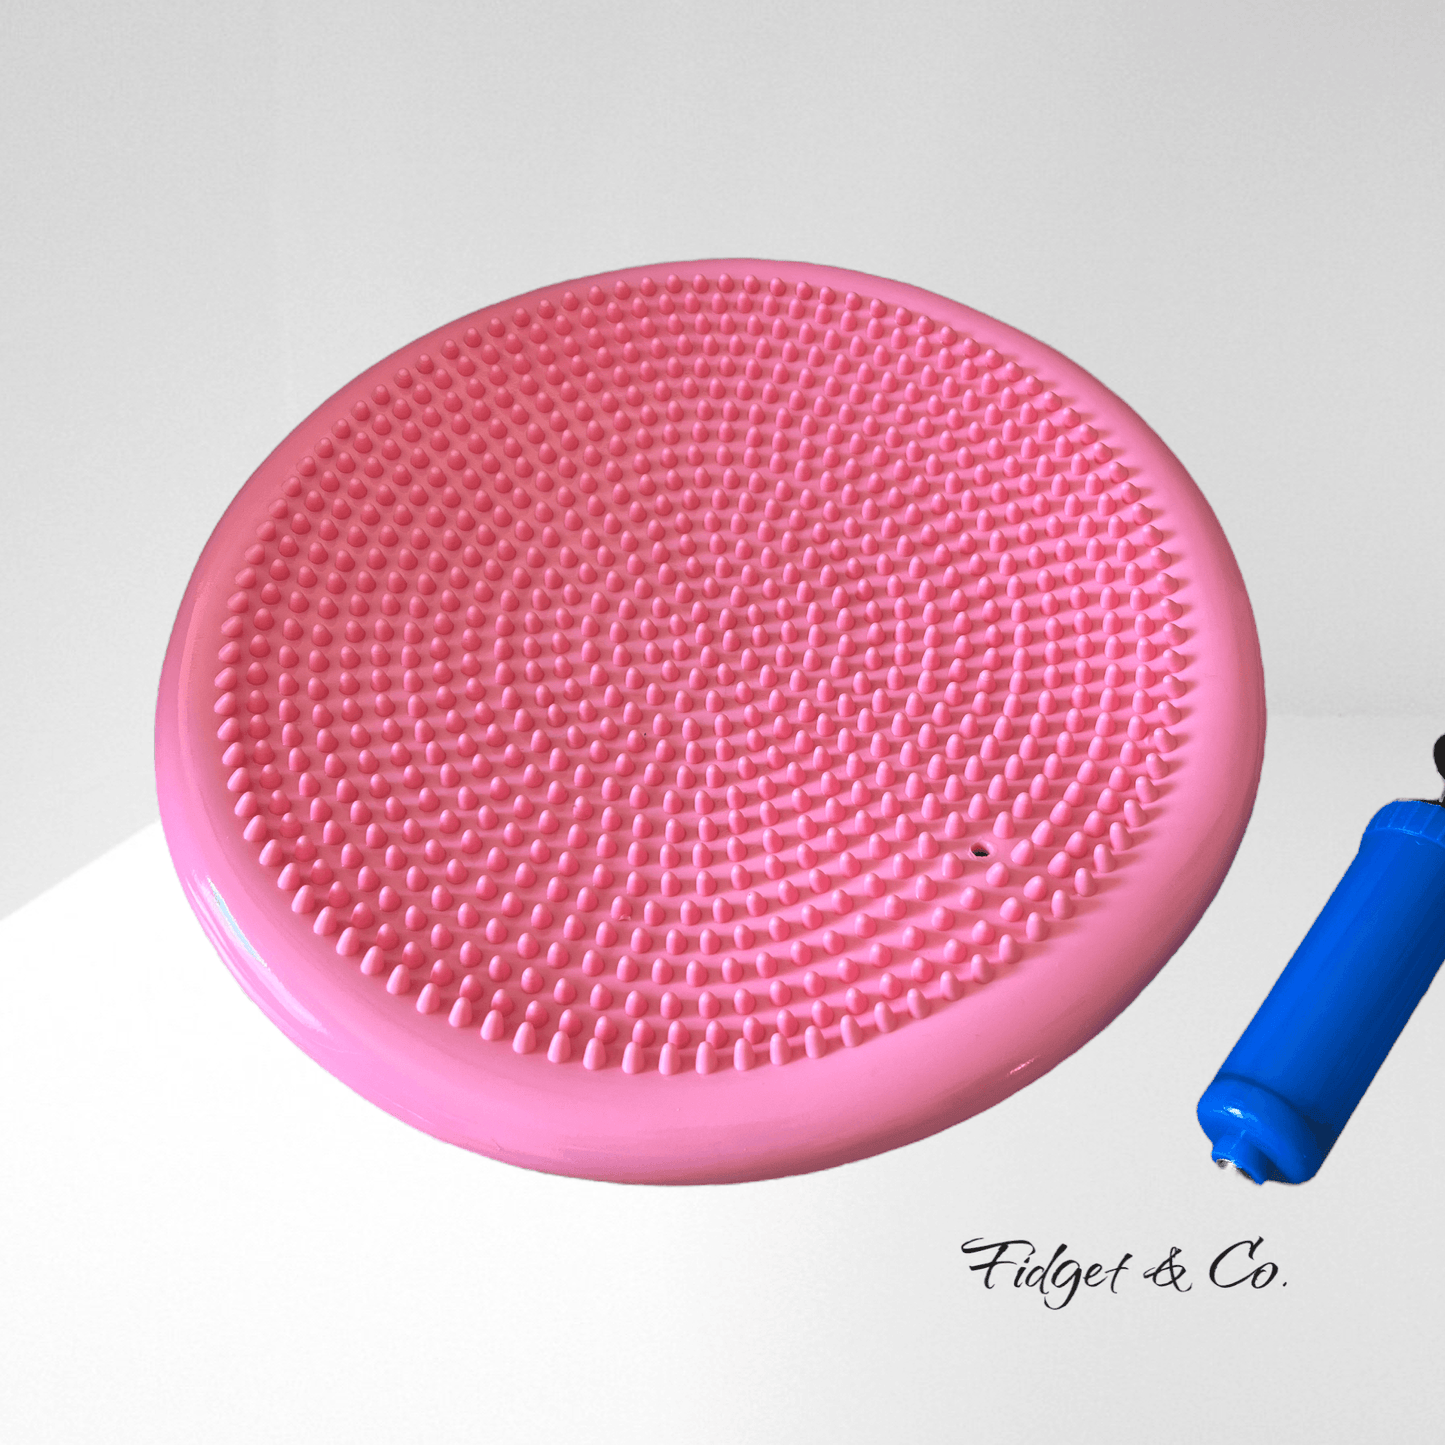 33cm Inflatable Yoga Sensory Stability Balance Disc | Wobble or Wiggle Cushion with Free pump - Fidget & Co.